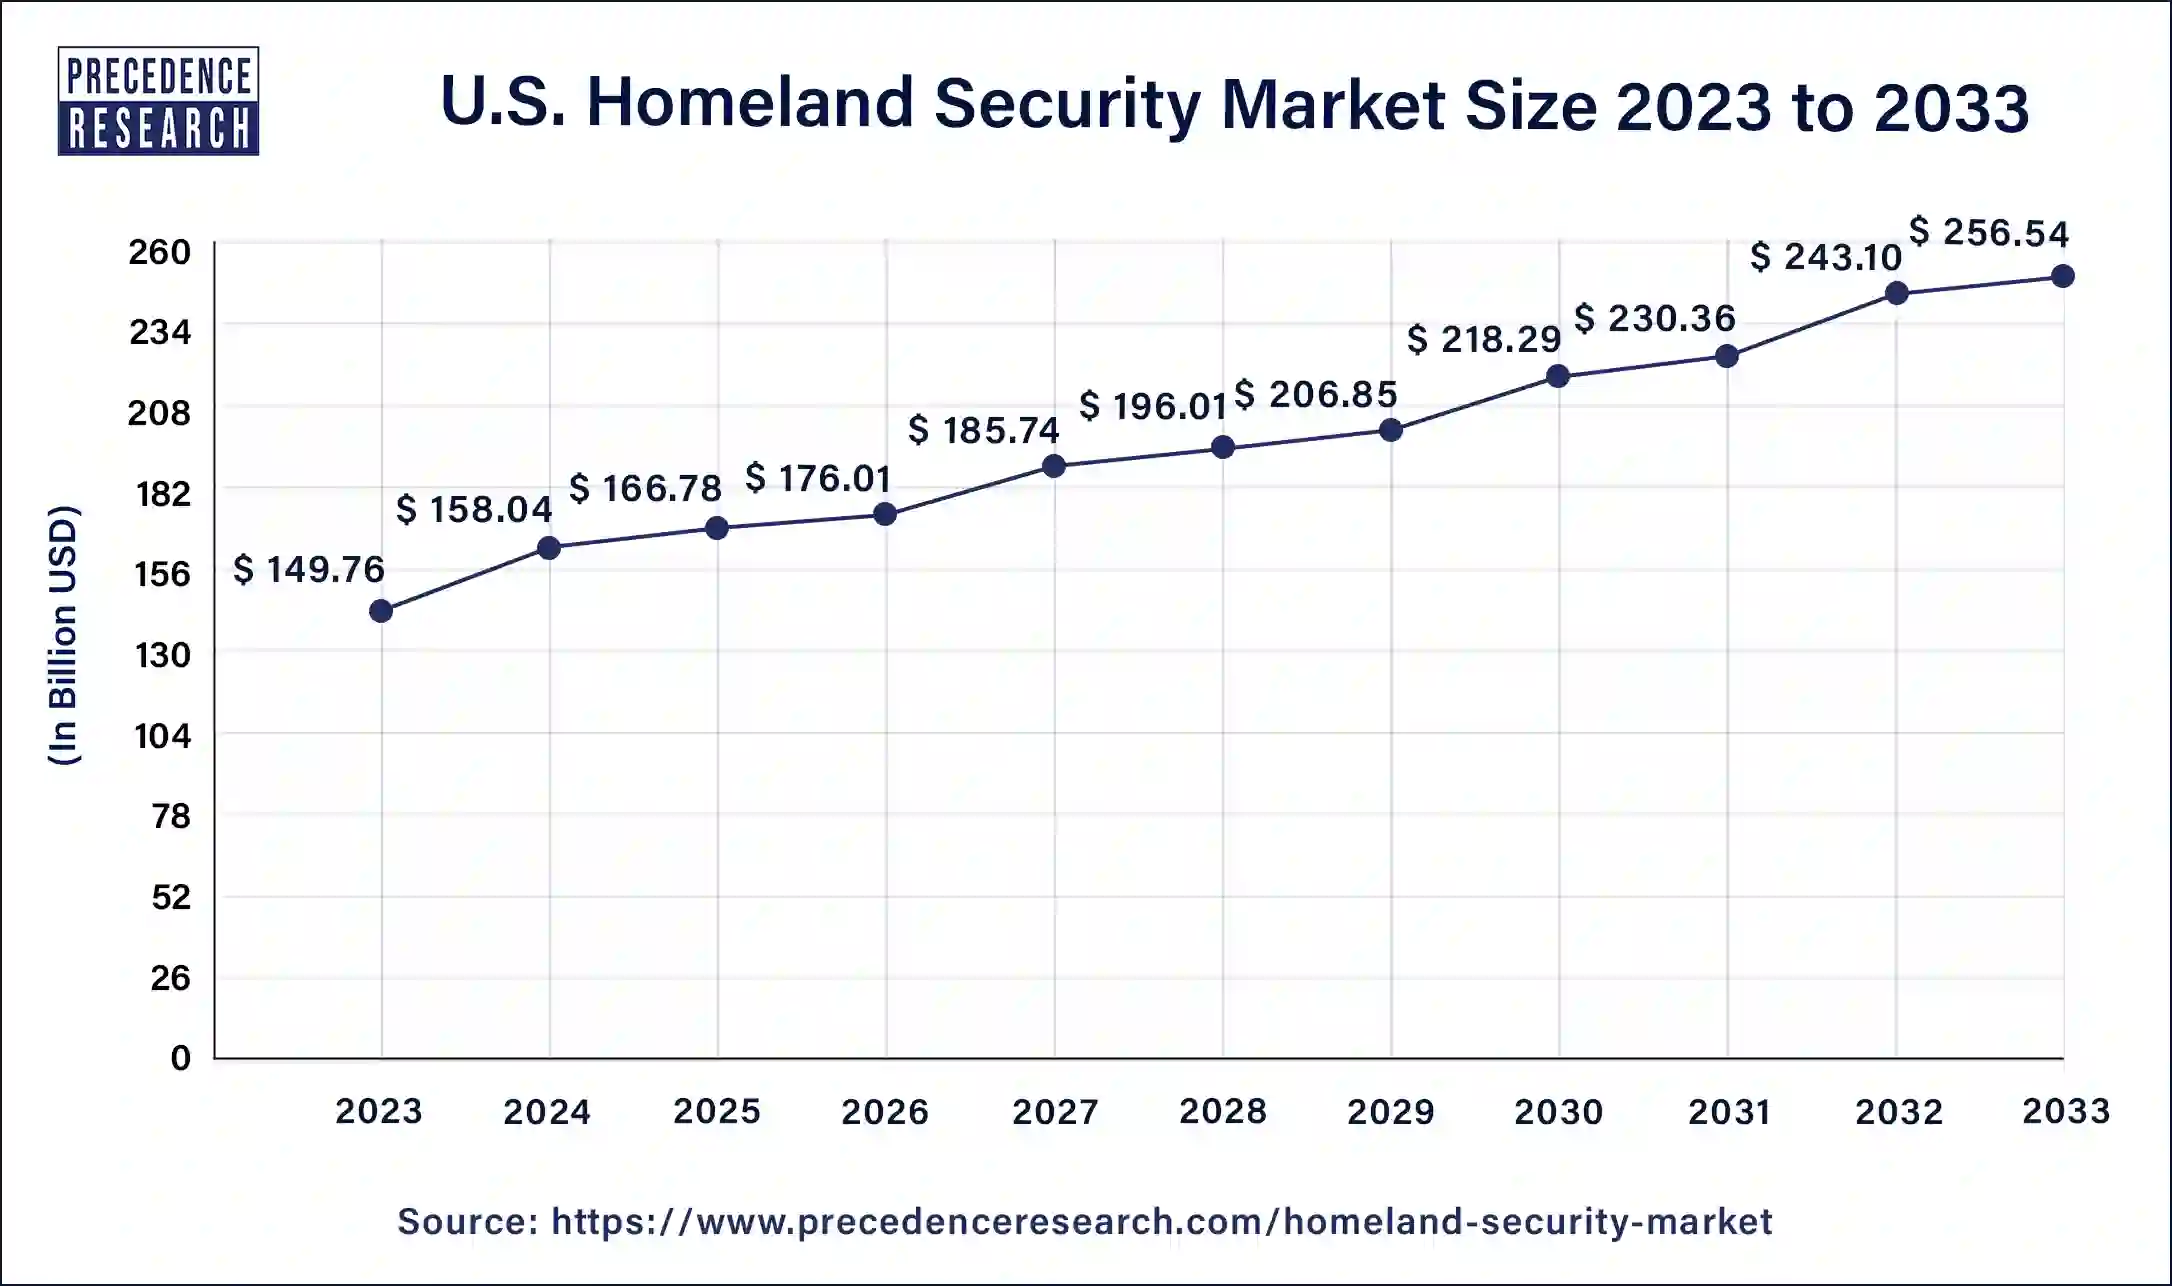 U.S. Homeland Security Market Size 2024 to 2033